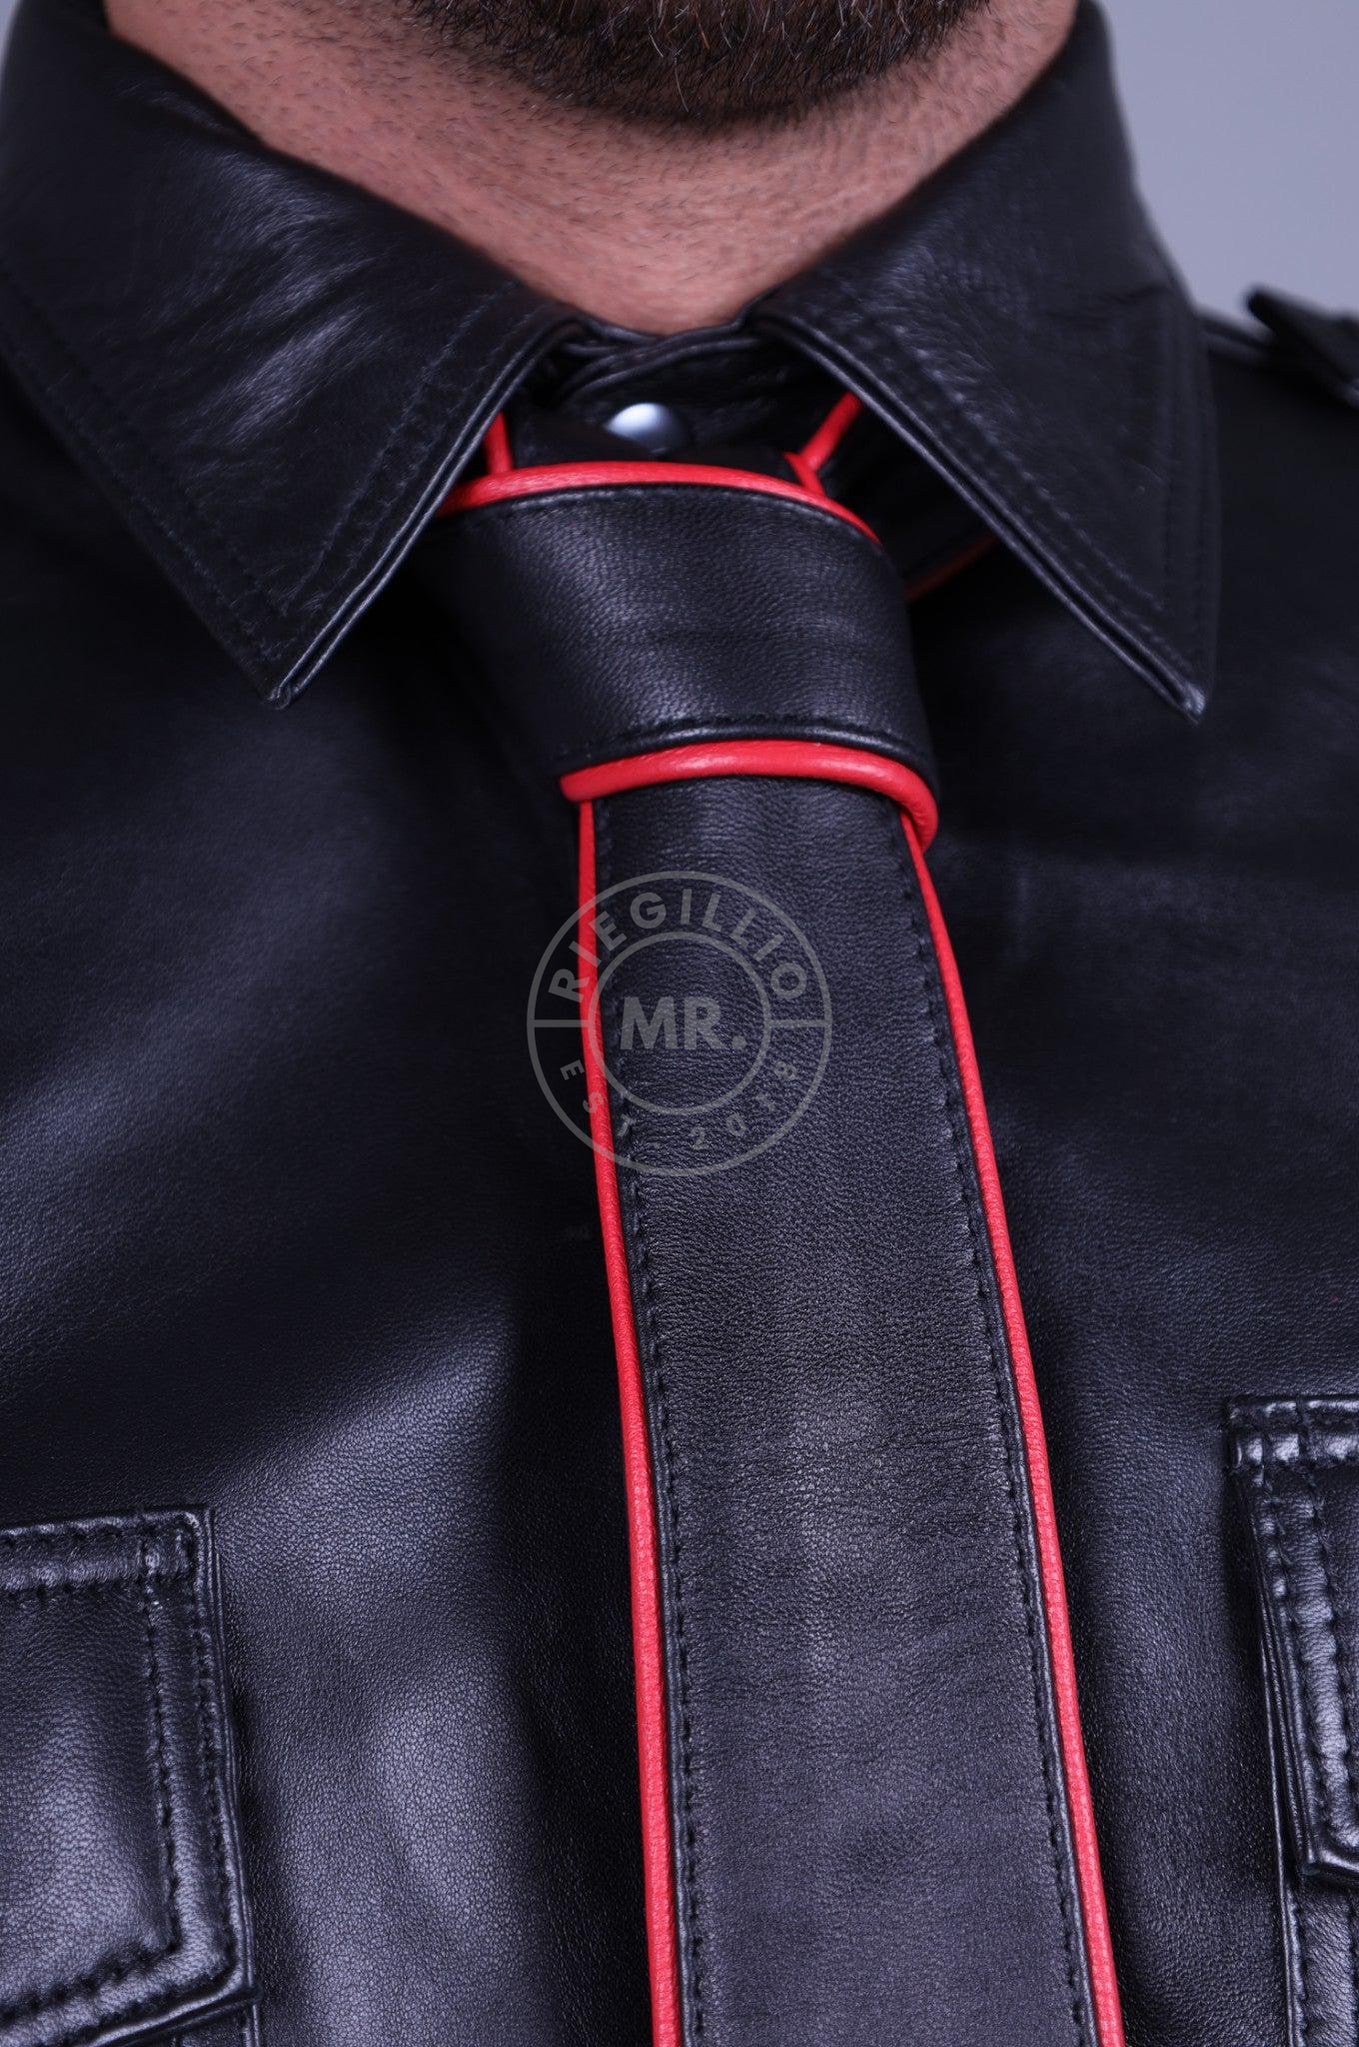 Black Leather Tie - RED Piping at MR. Riegillio